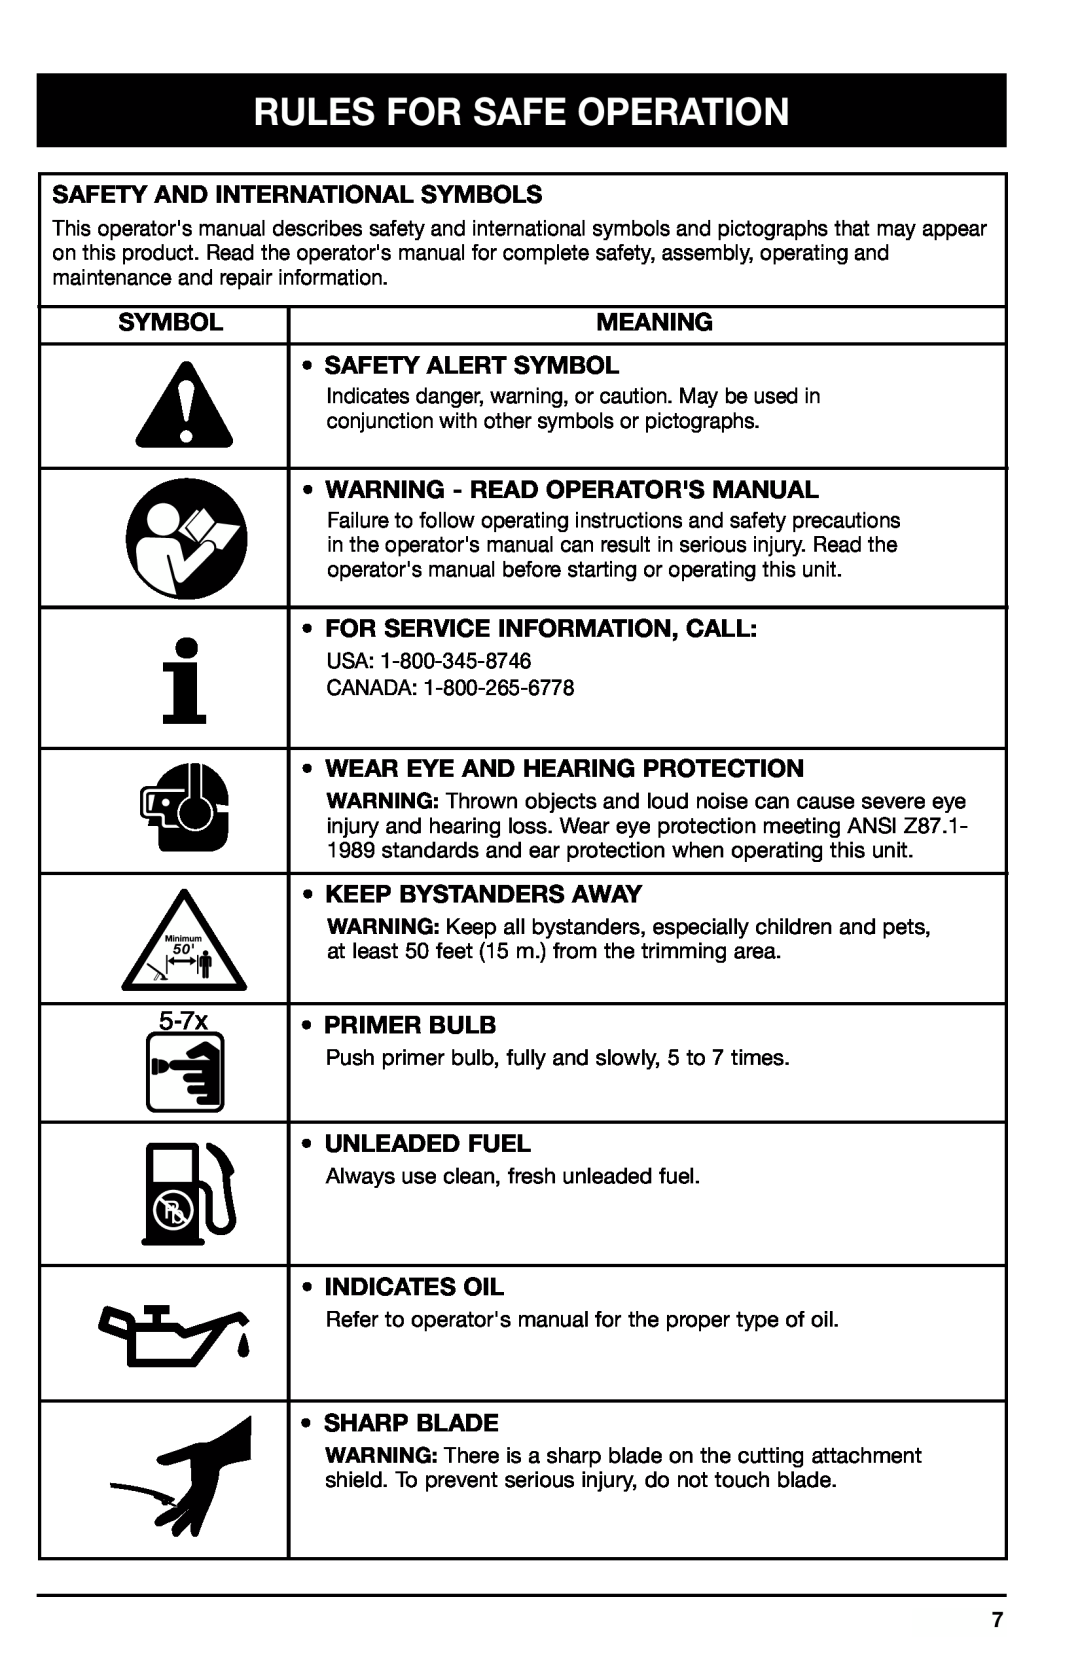 Ryobi 780r Safety And International Symbols, Meaning, Safety Alert Symbol, Warning - Read Operators Manual, Primer Bulb 